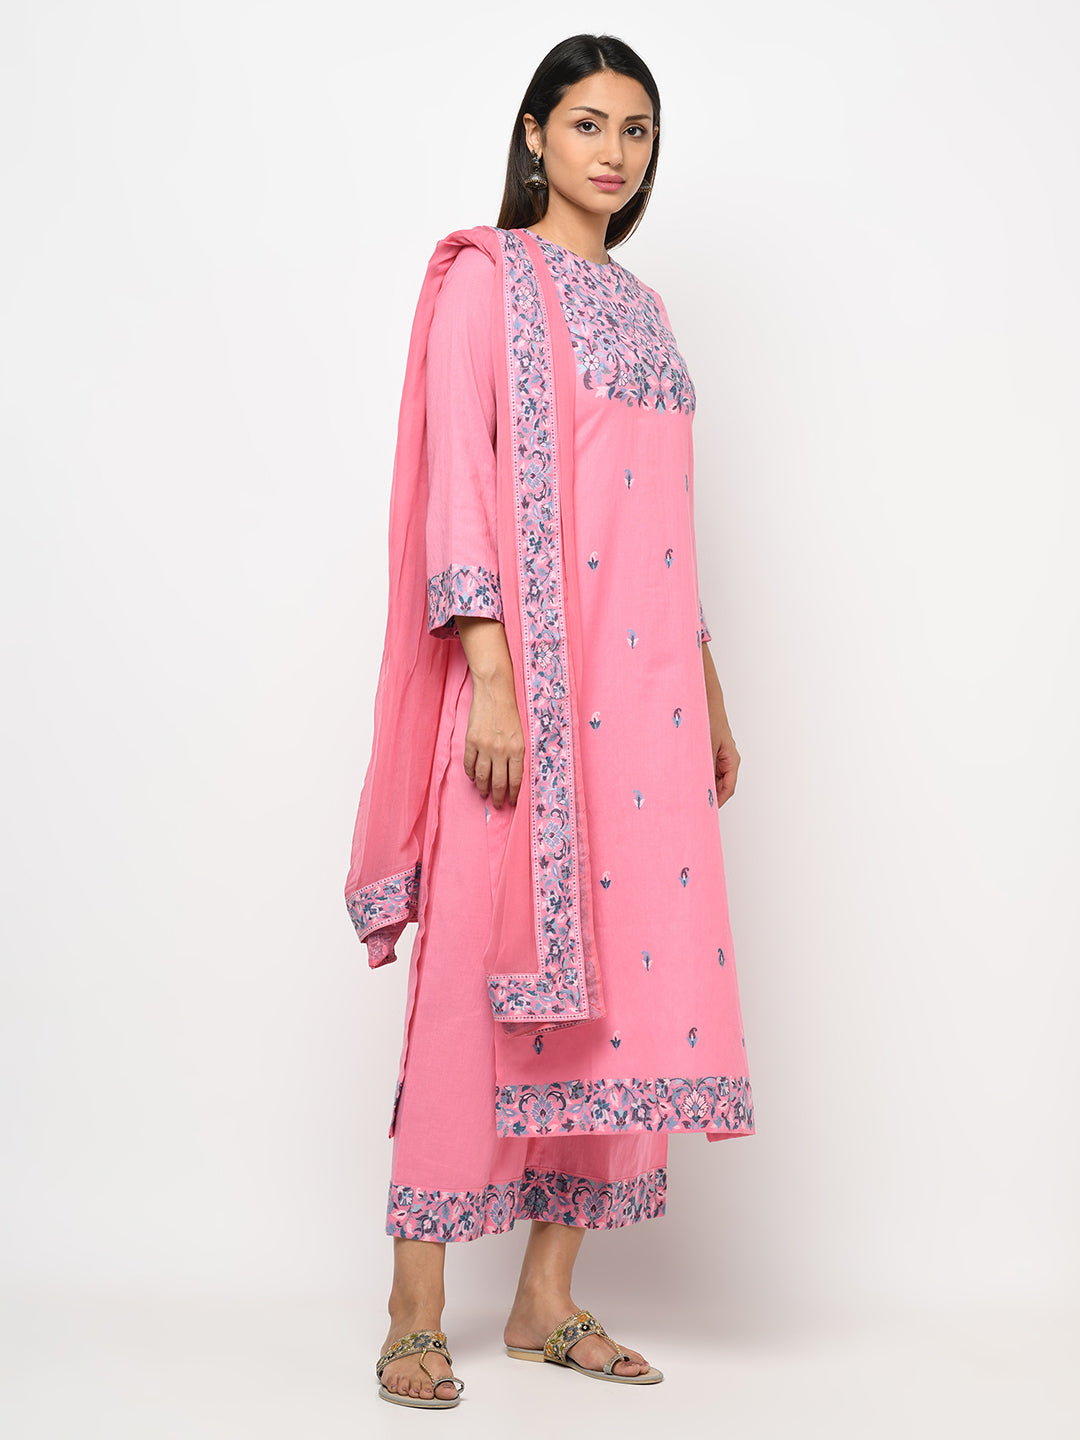 Cotton Kani Woven Pink Dress Material With 4 Side Patti Dupatta